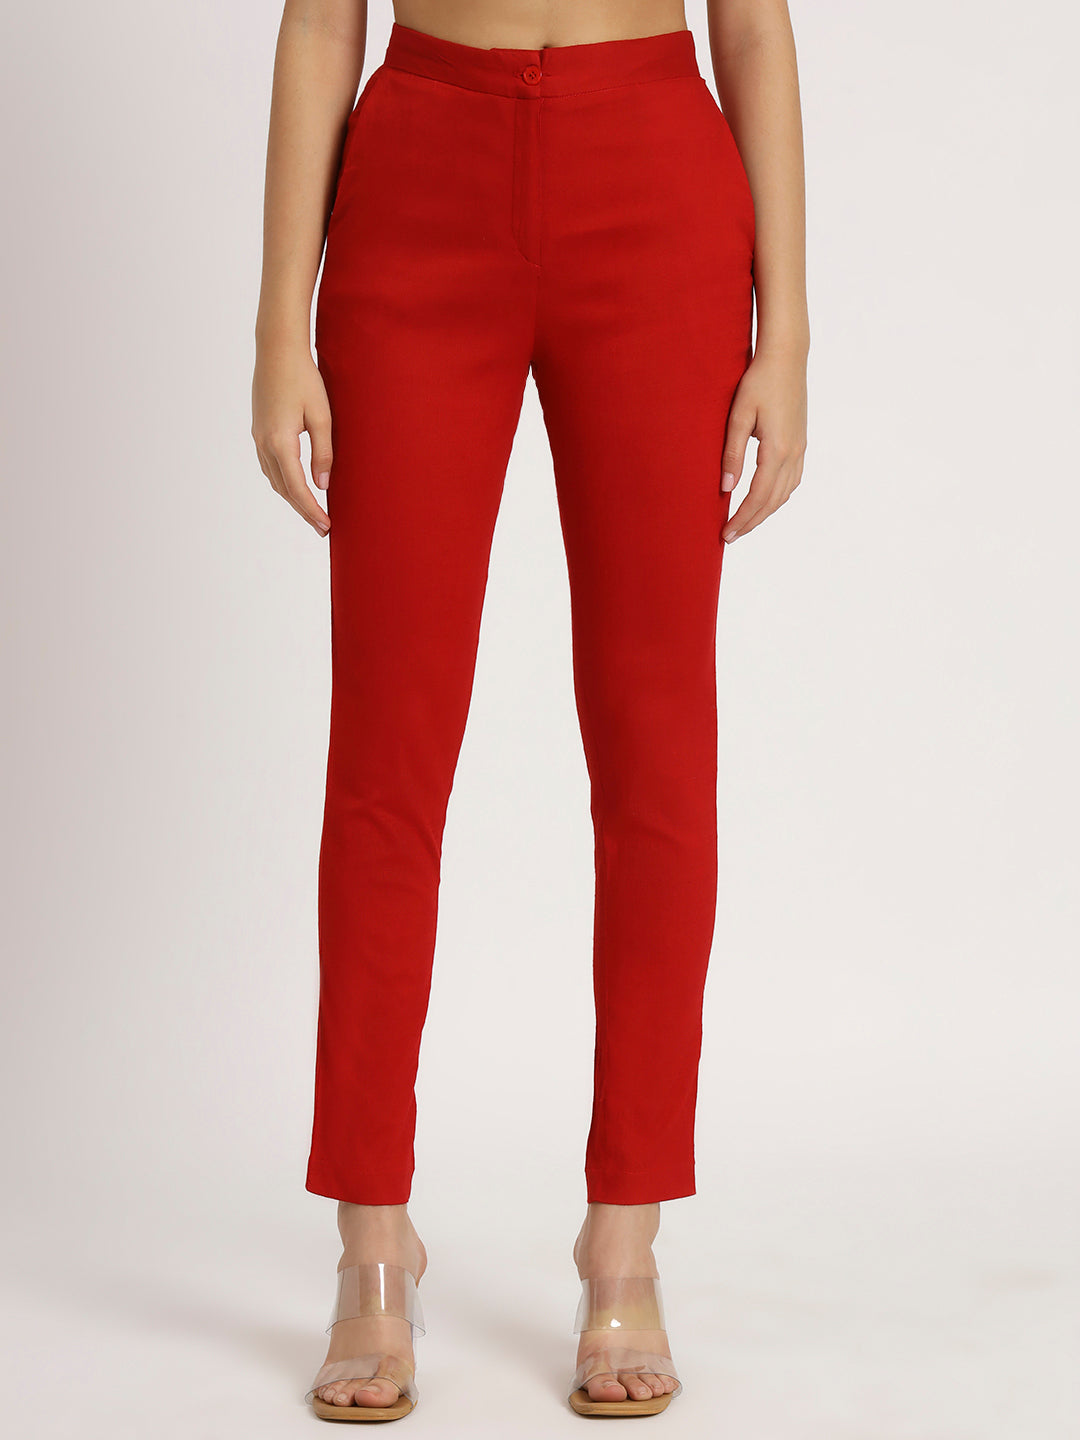 Lava Red Lycra Pants